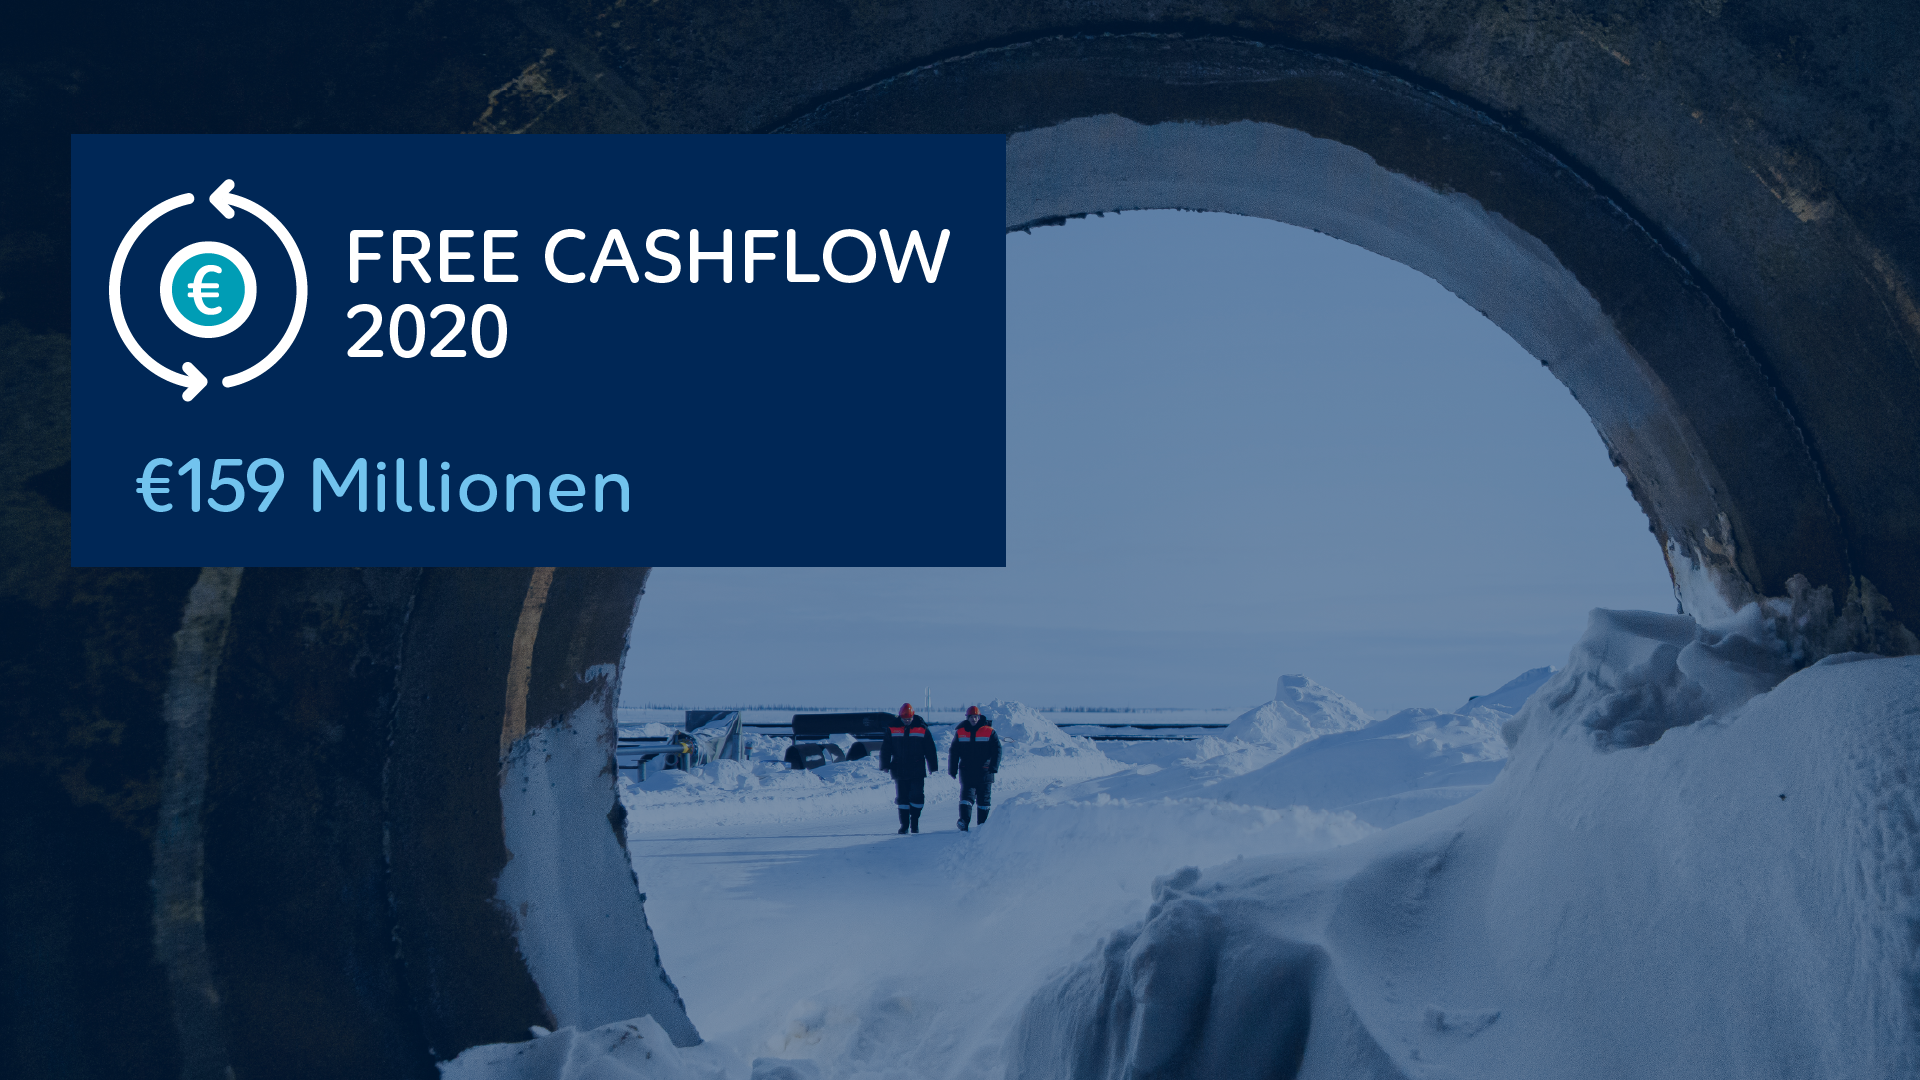 Free Cash Flow 2020